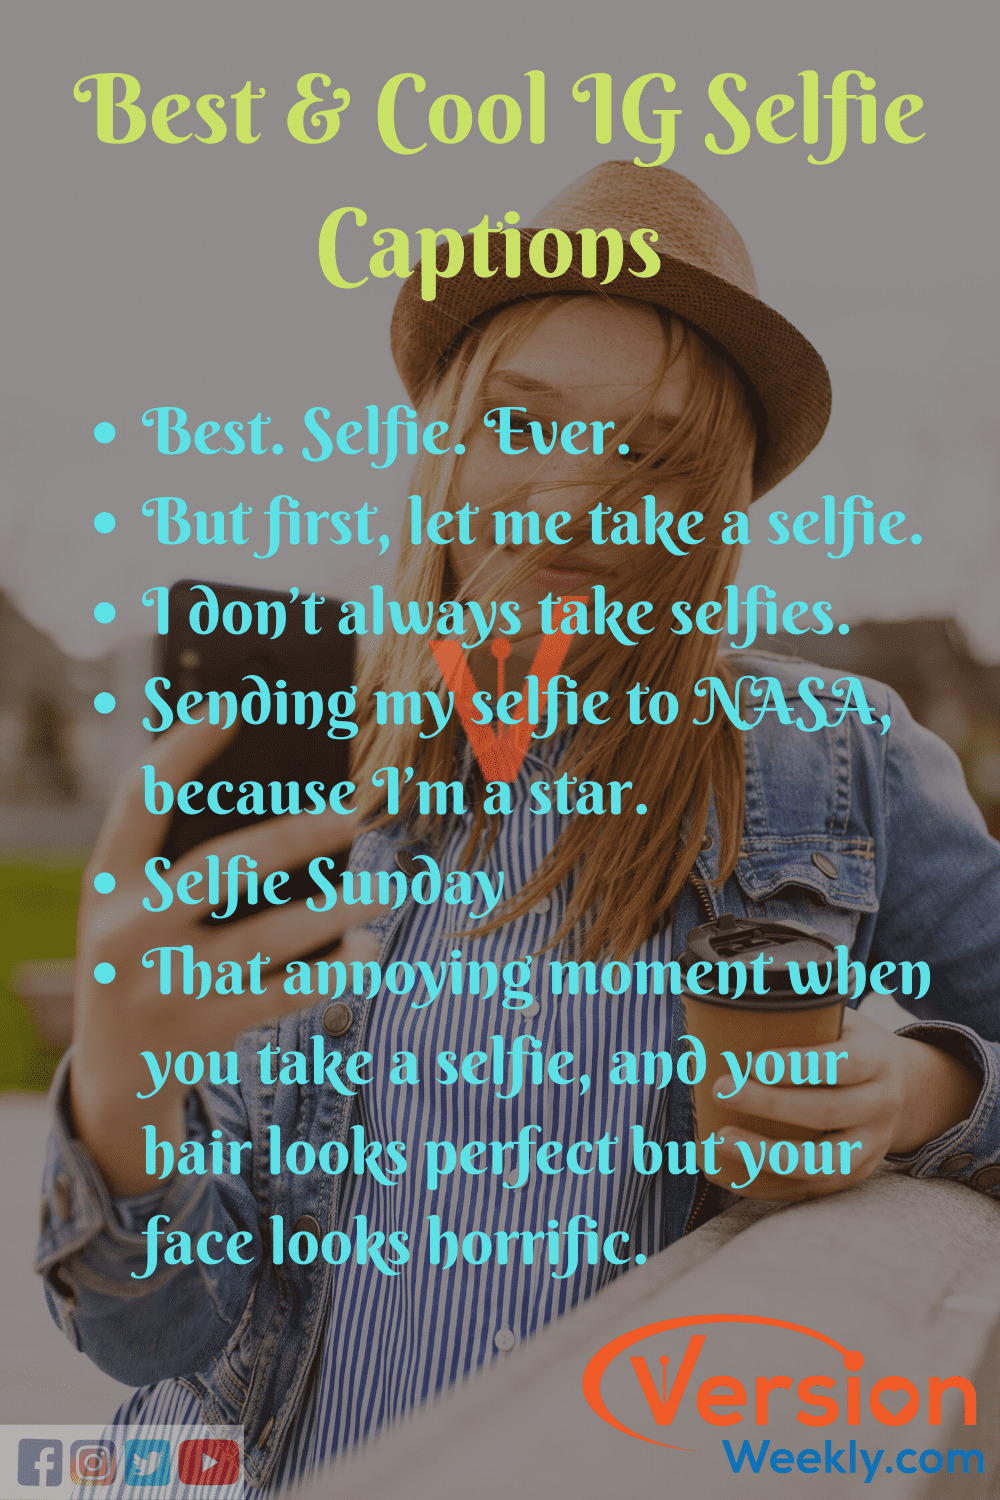 Best IG Selfie Quotes & Captions